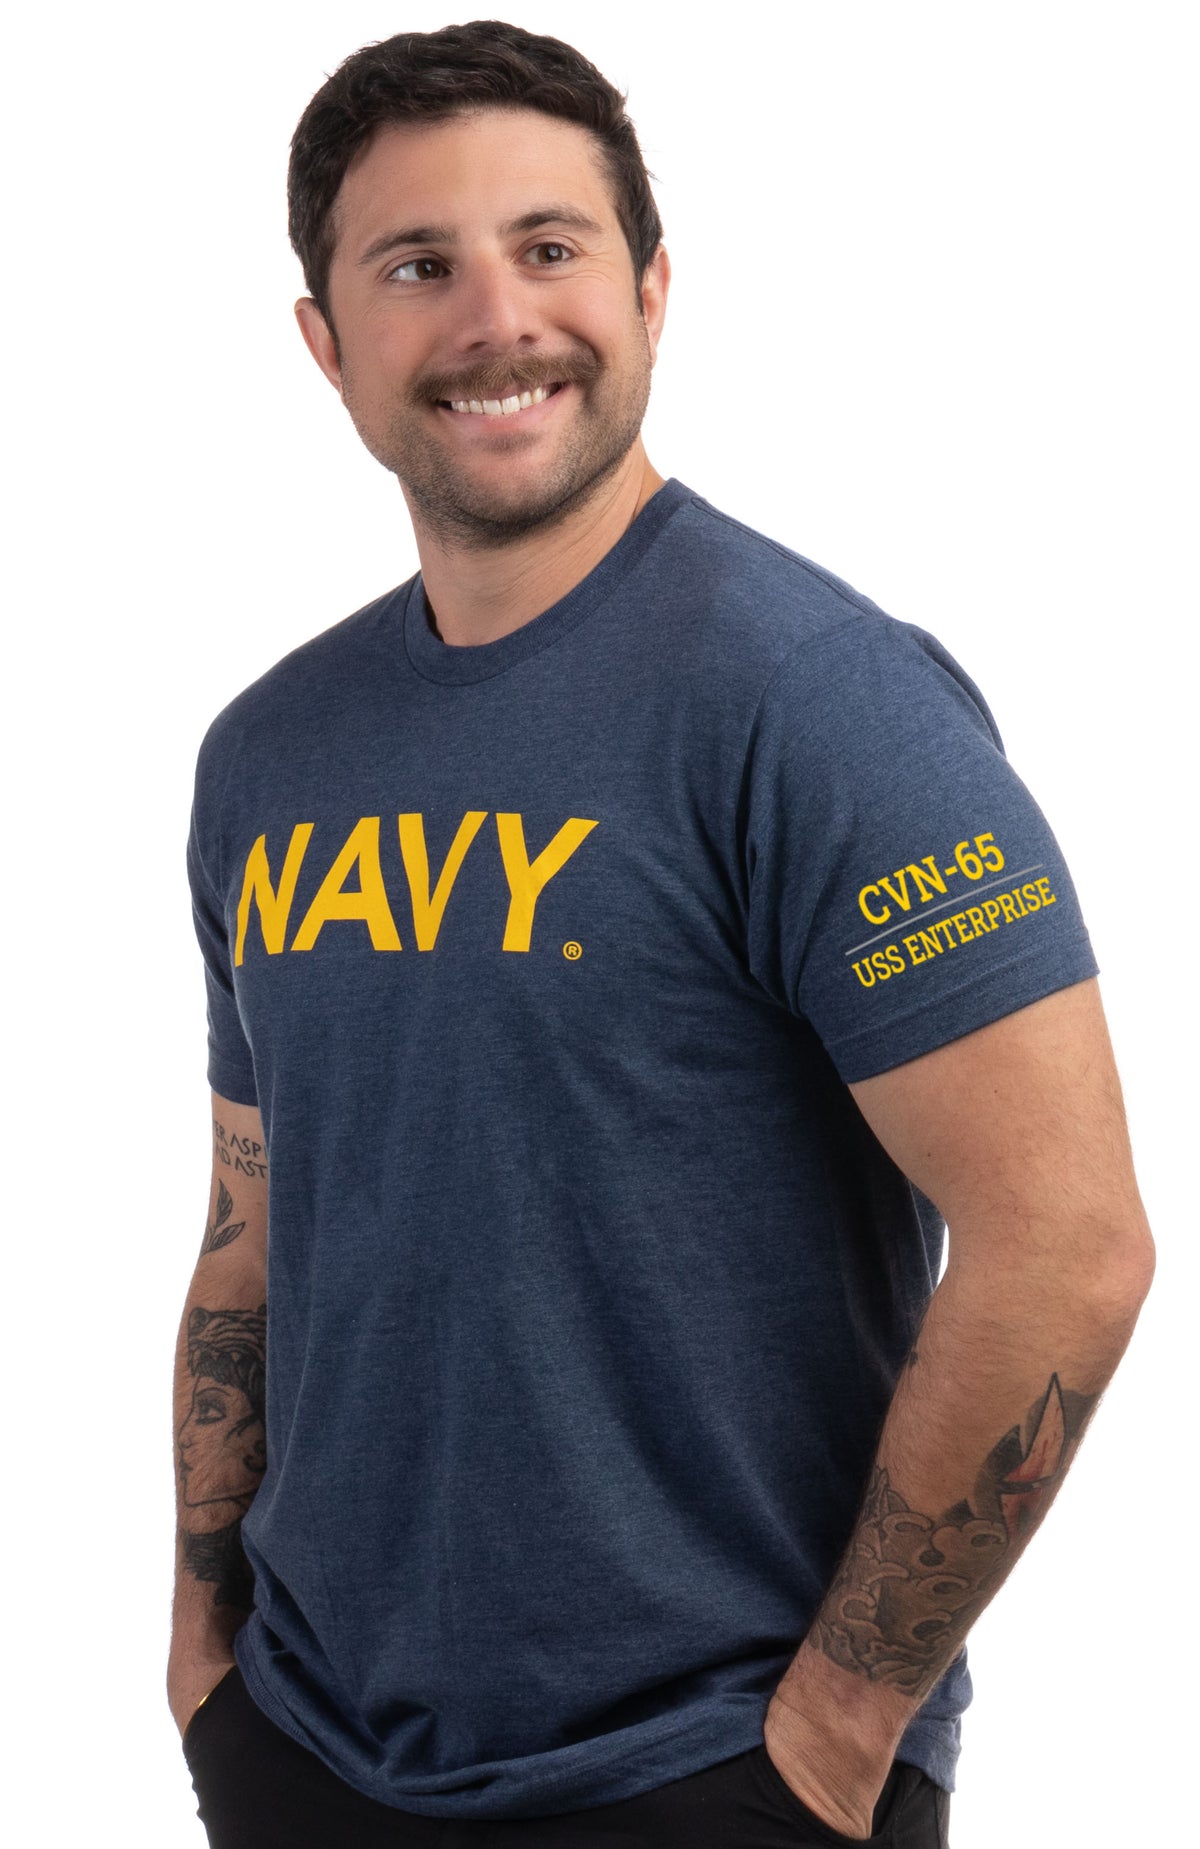 USS Enterprise, CVN-65 | U.S. Navy Sailor Veteran USN United States Naval T-shirt for Men Women